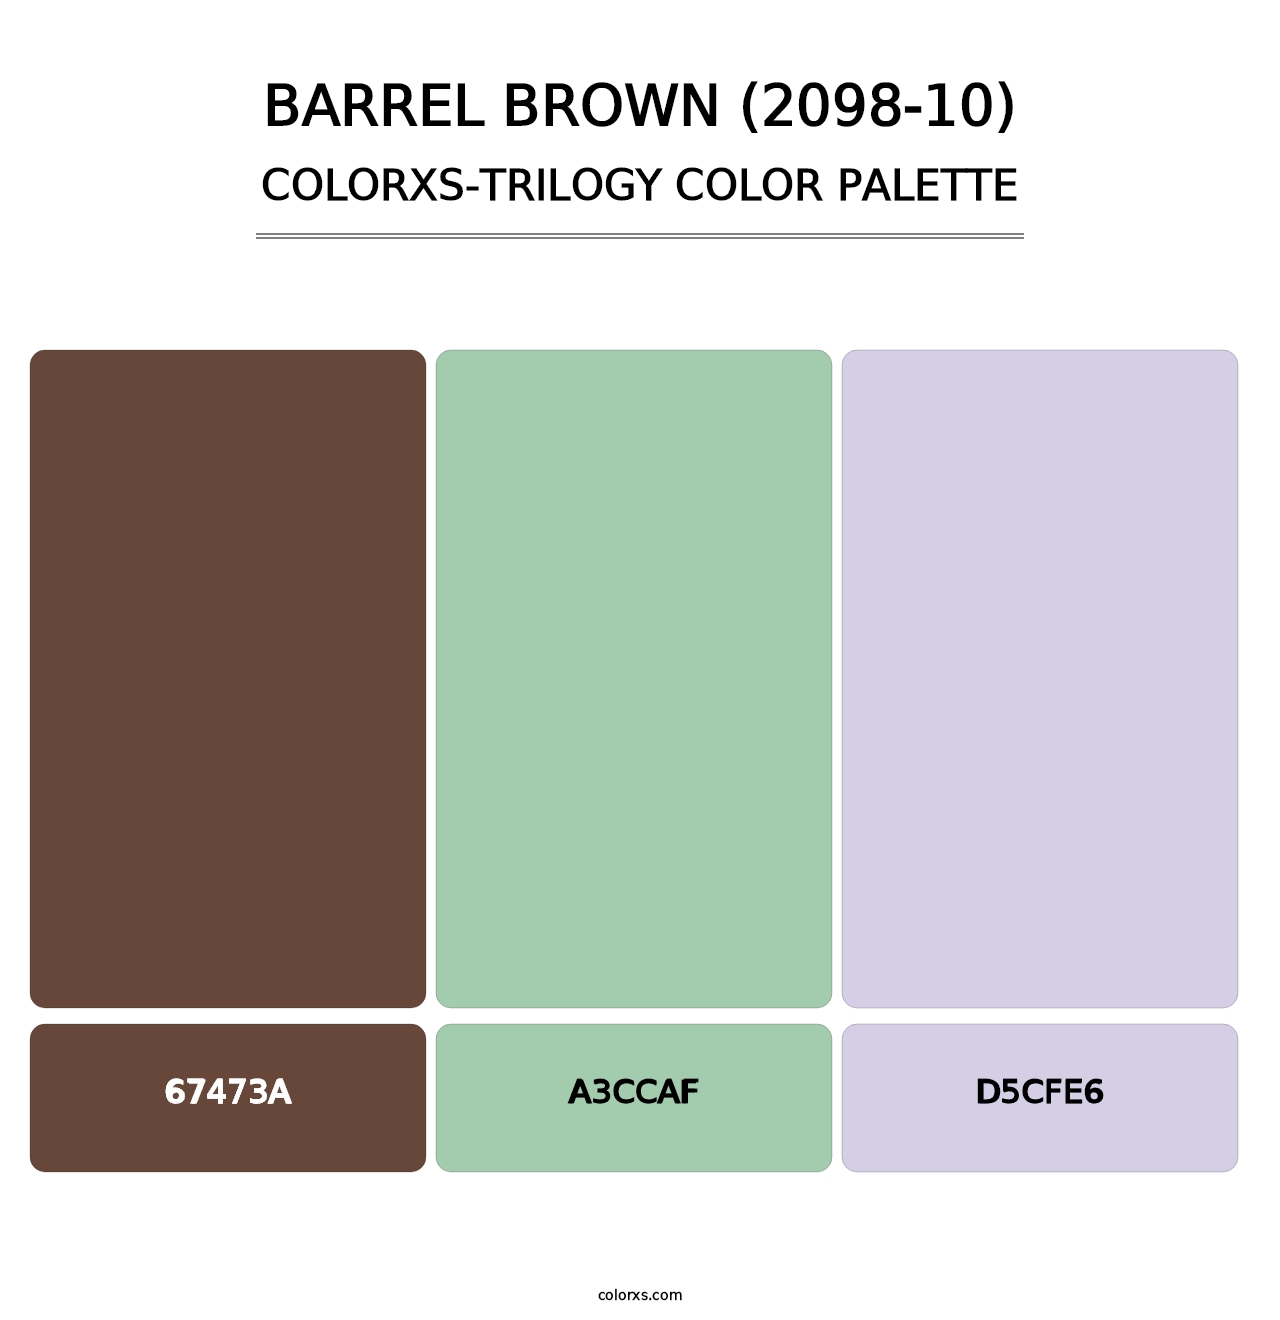 Barrel Brown (2098-10) - Colorxs Trilogy Palette